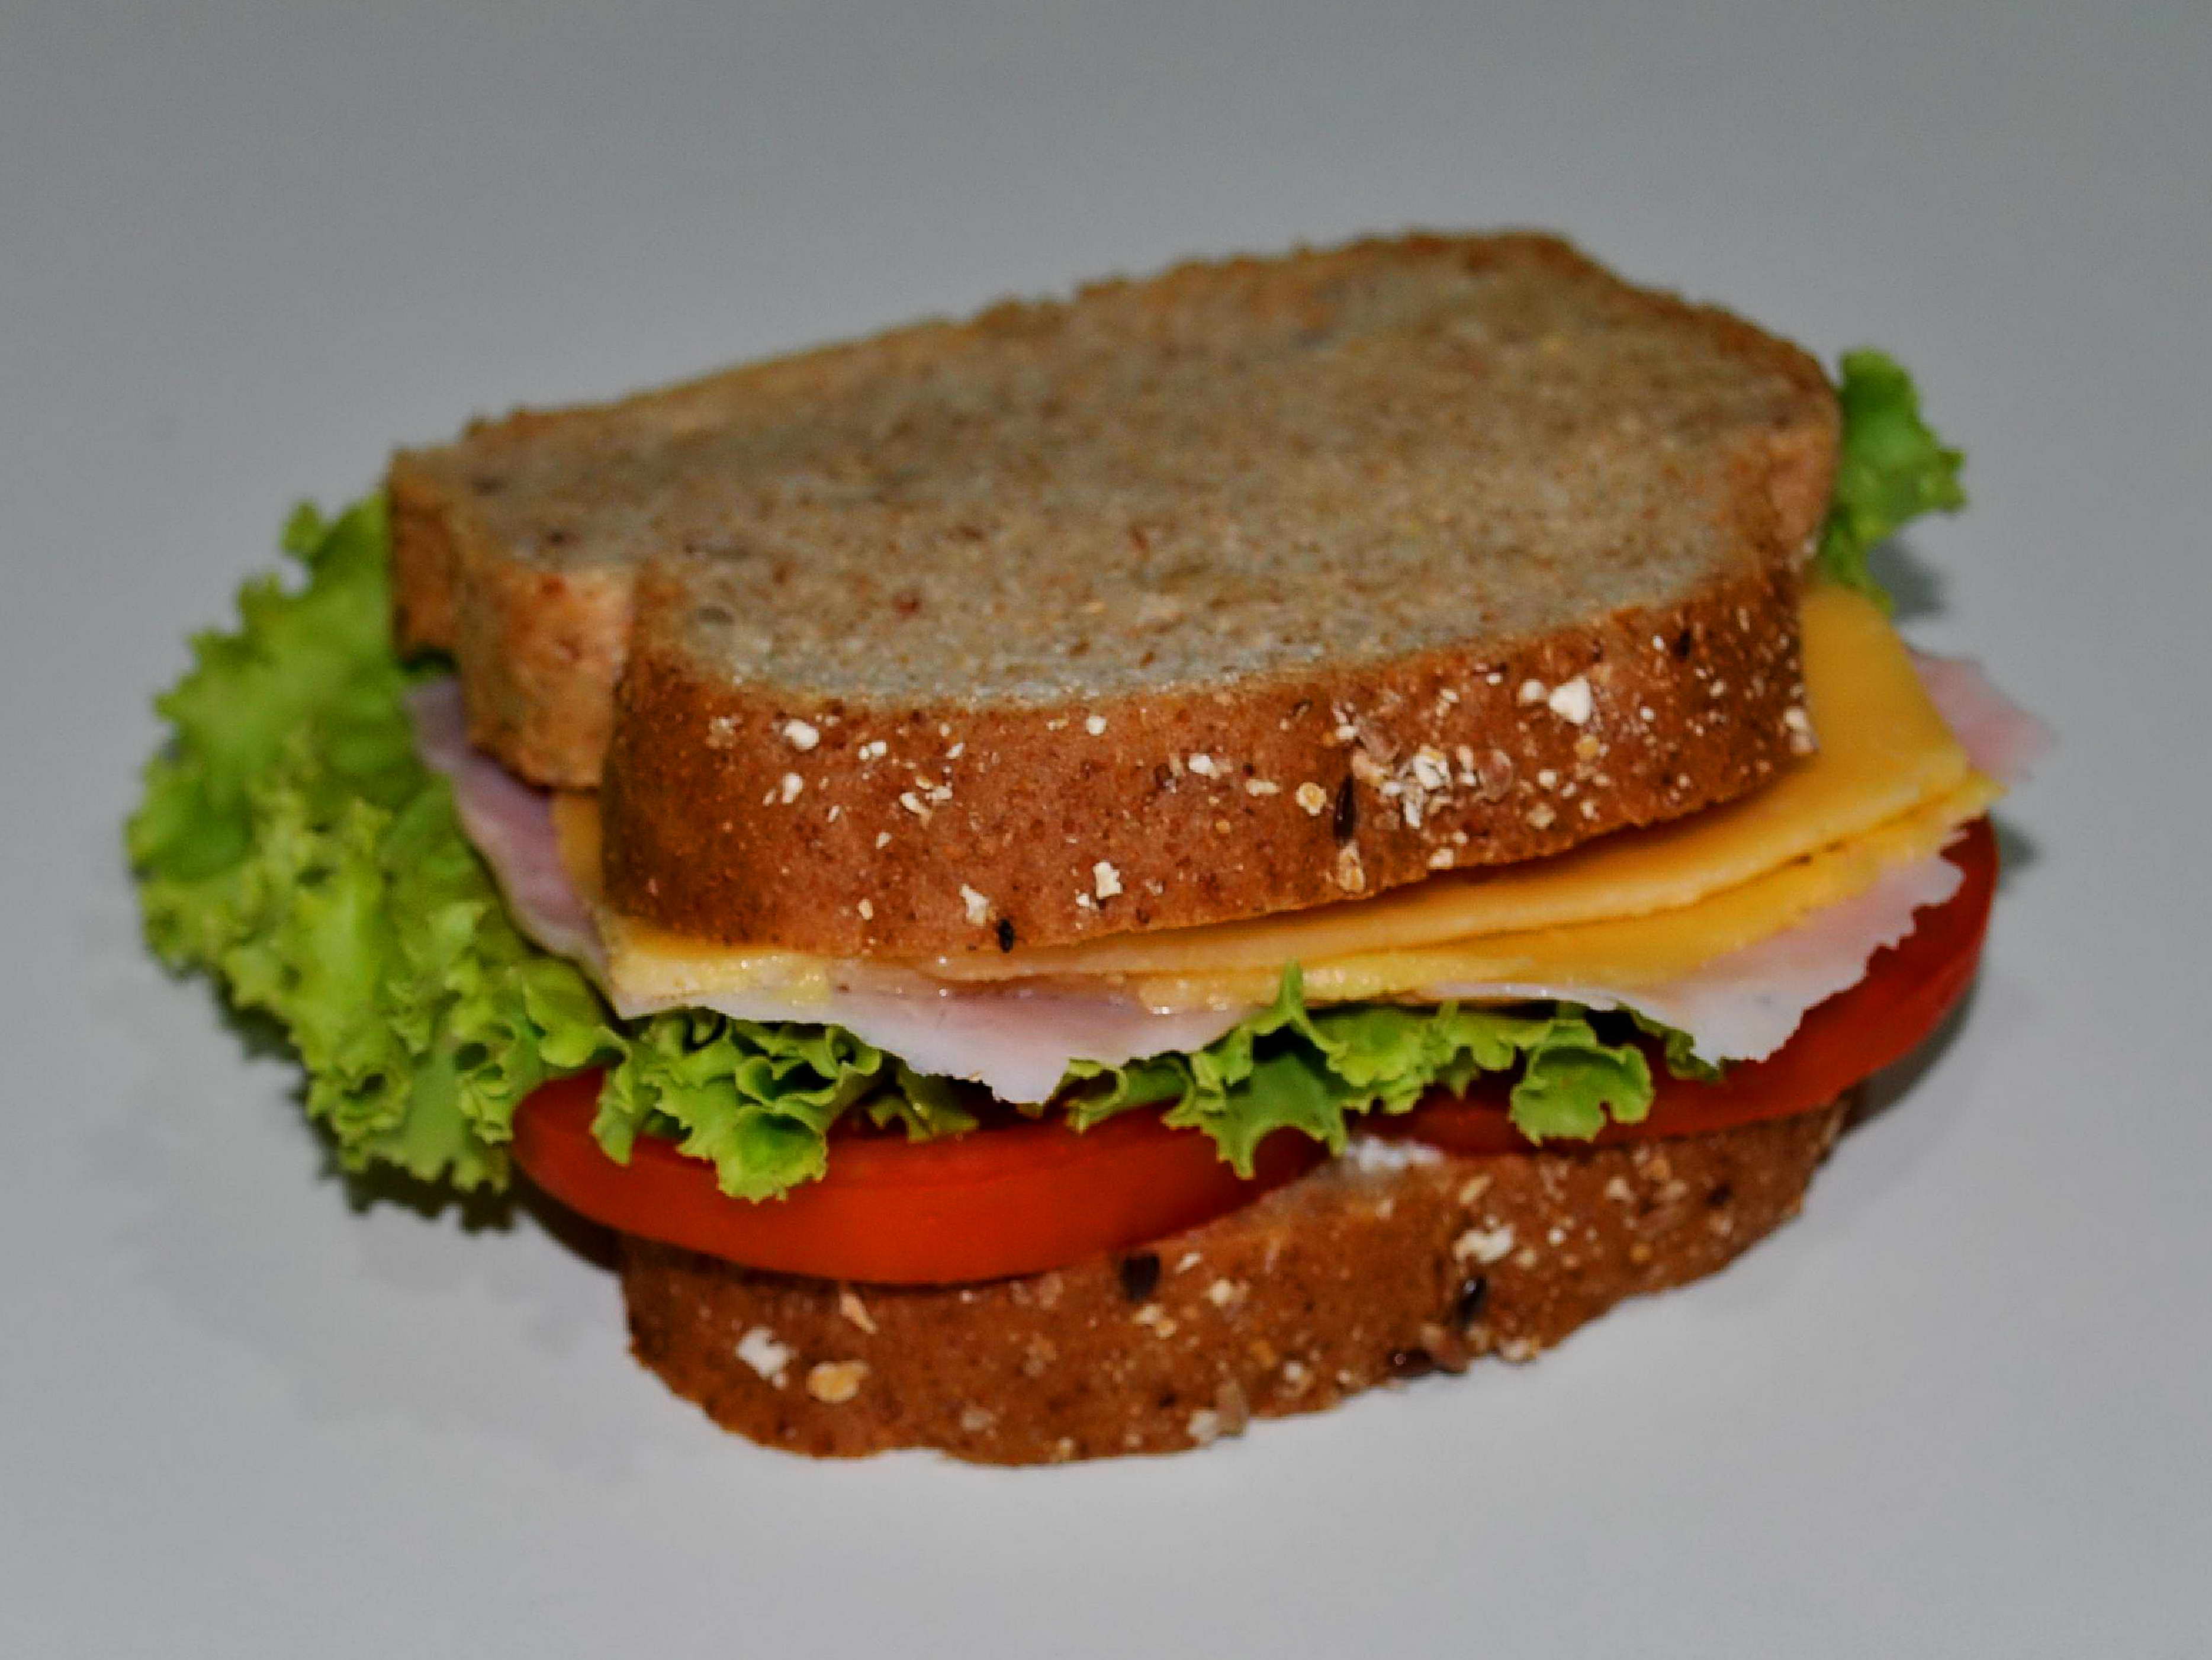 Kostenlose Bild: Sandwich, Brot, Tomaten, Salat